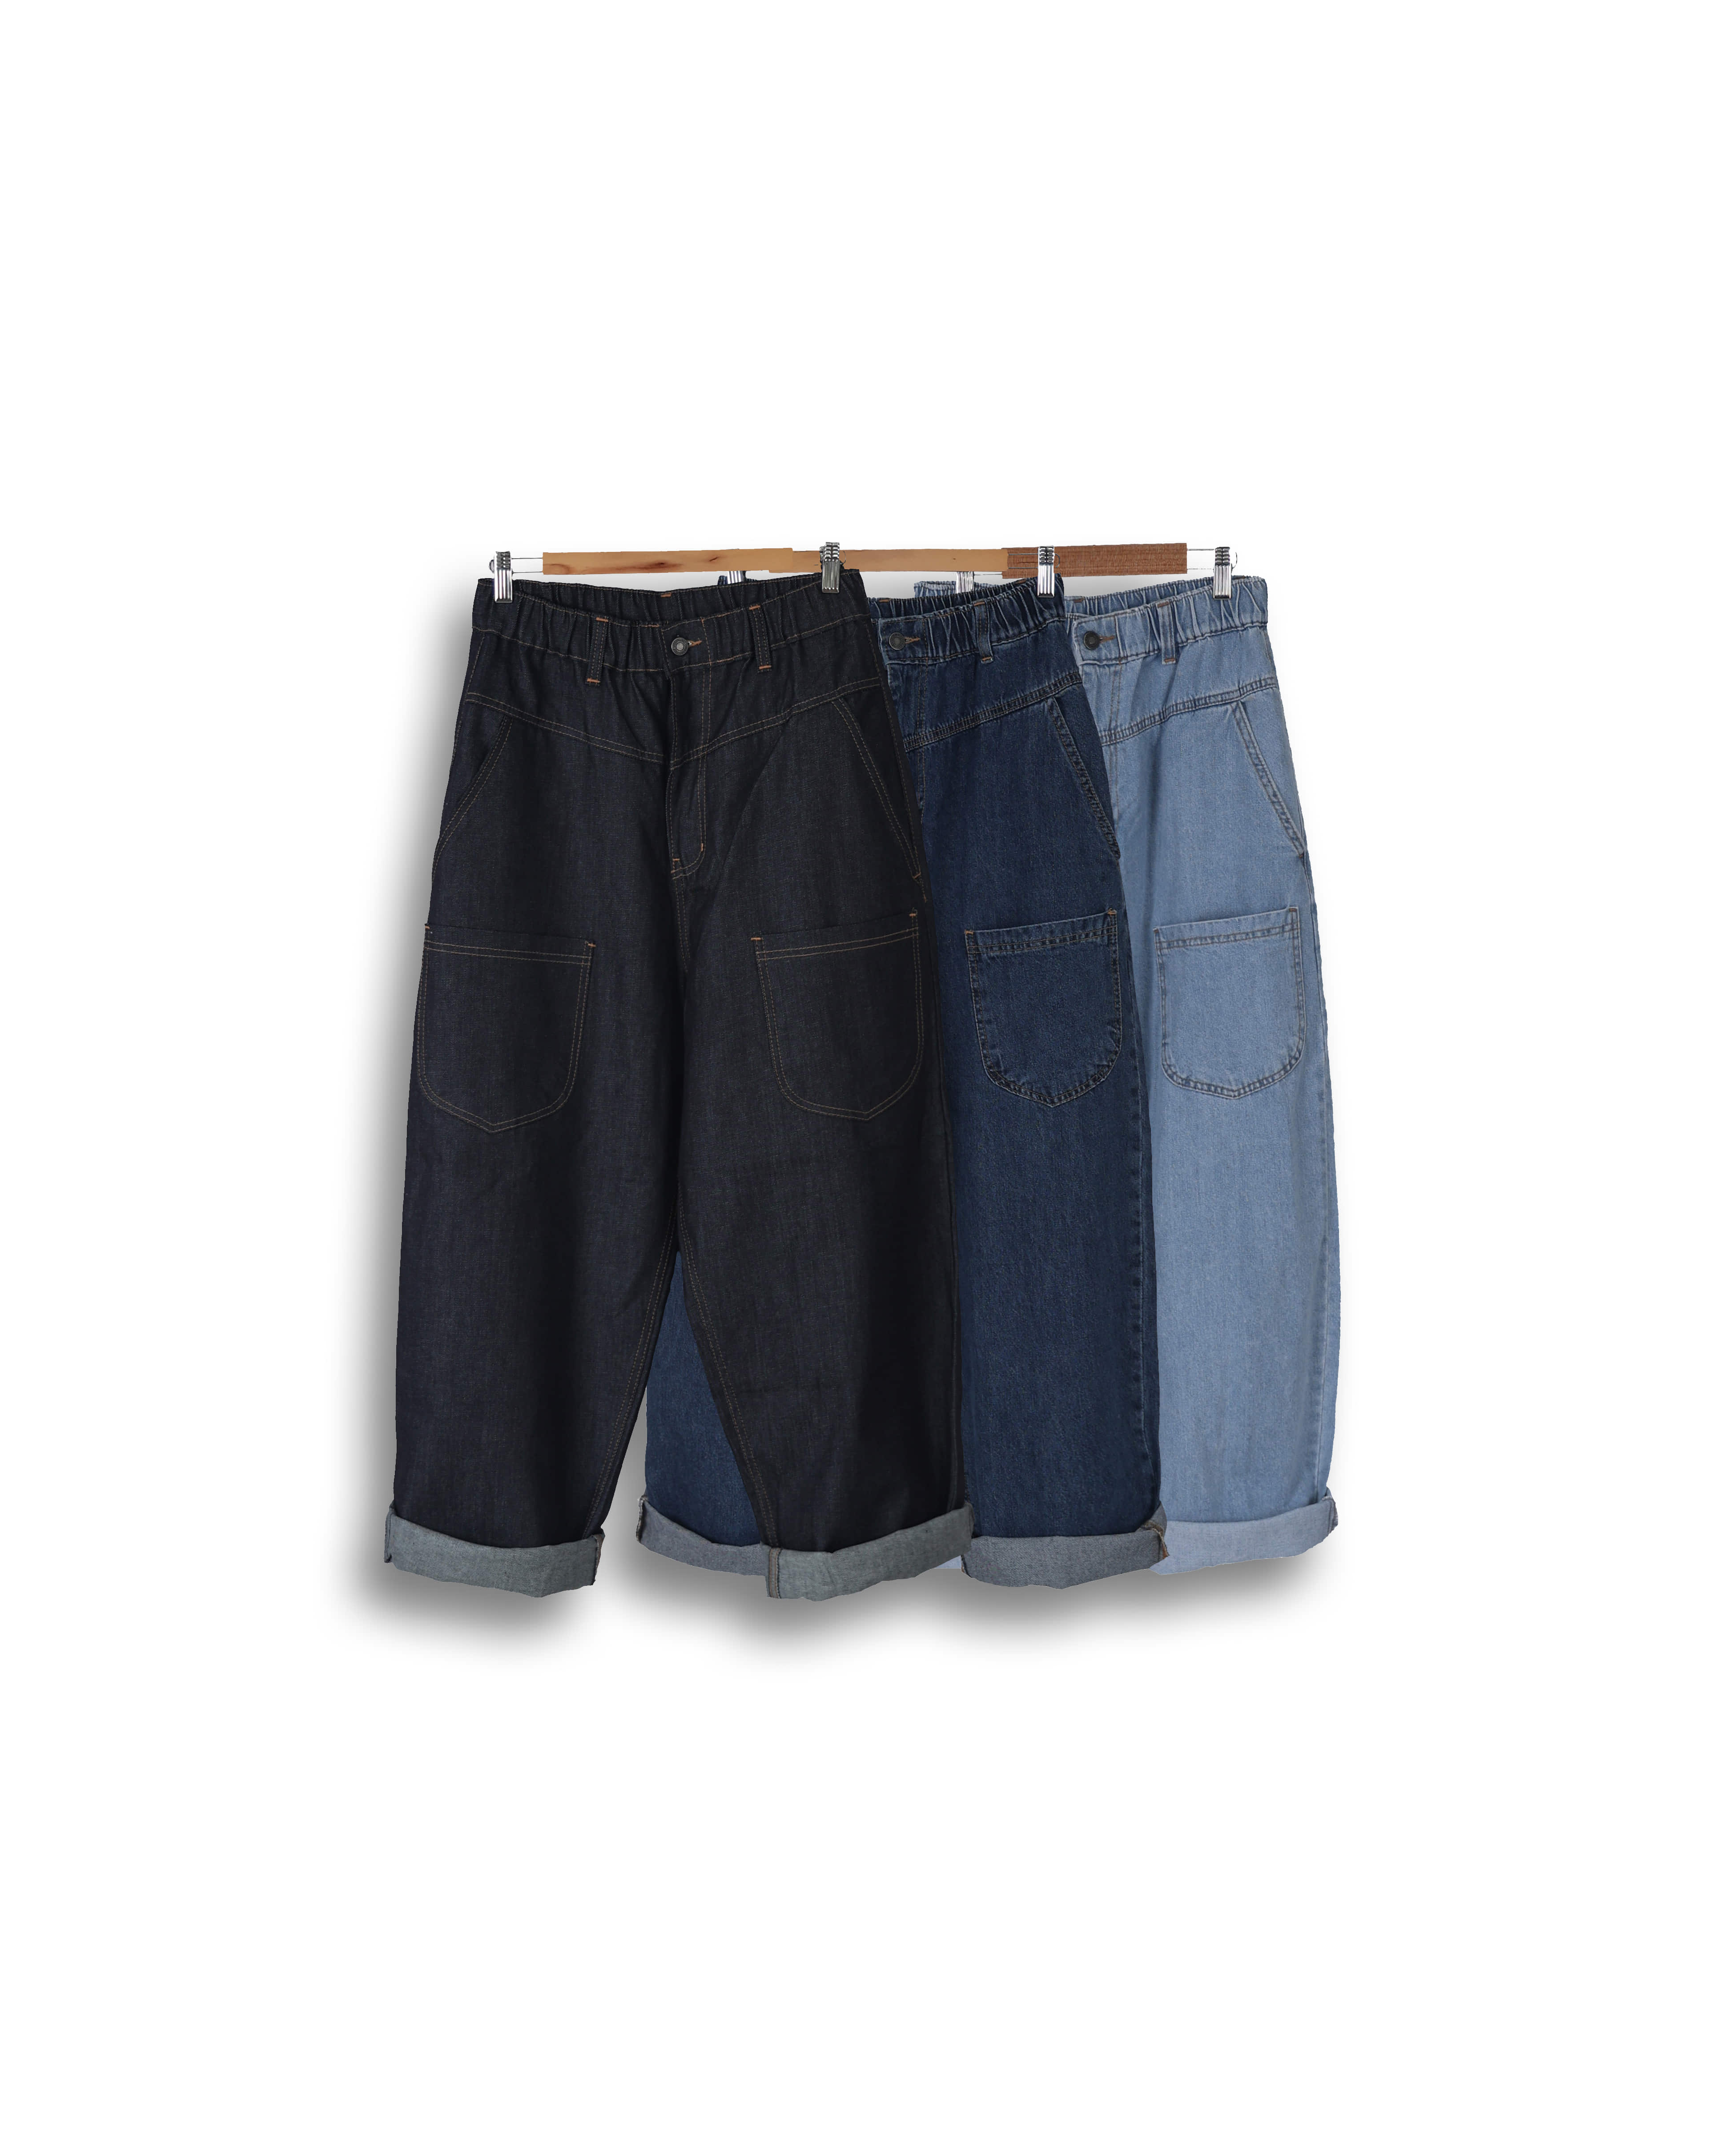 Out Pocket Work Denim Pants (Raw Denim/Middle Denim/Light Denim)